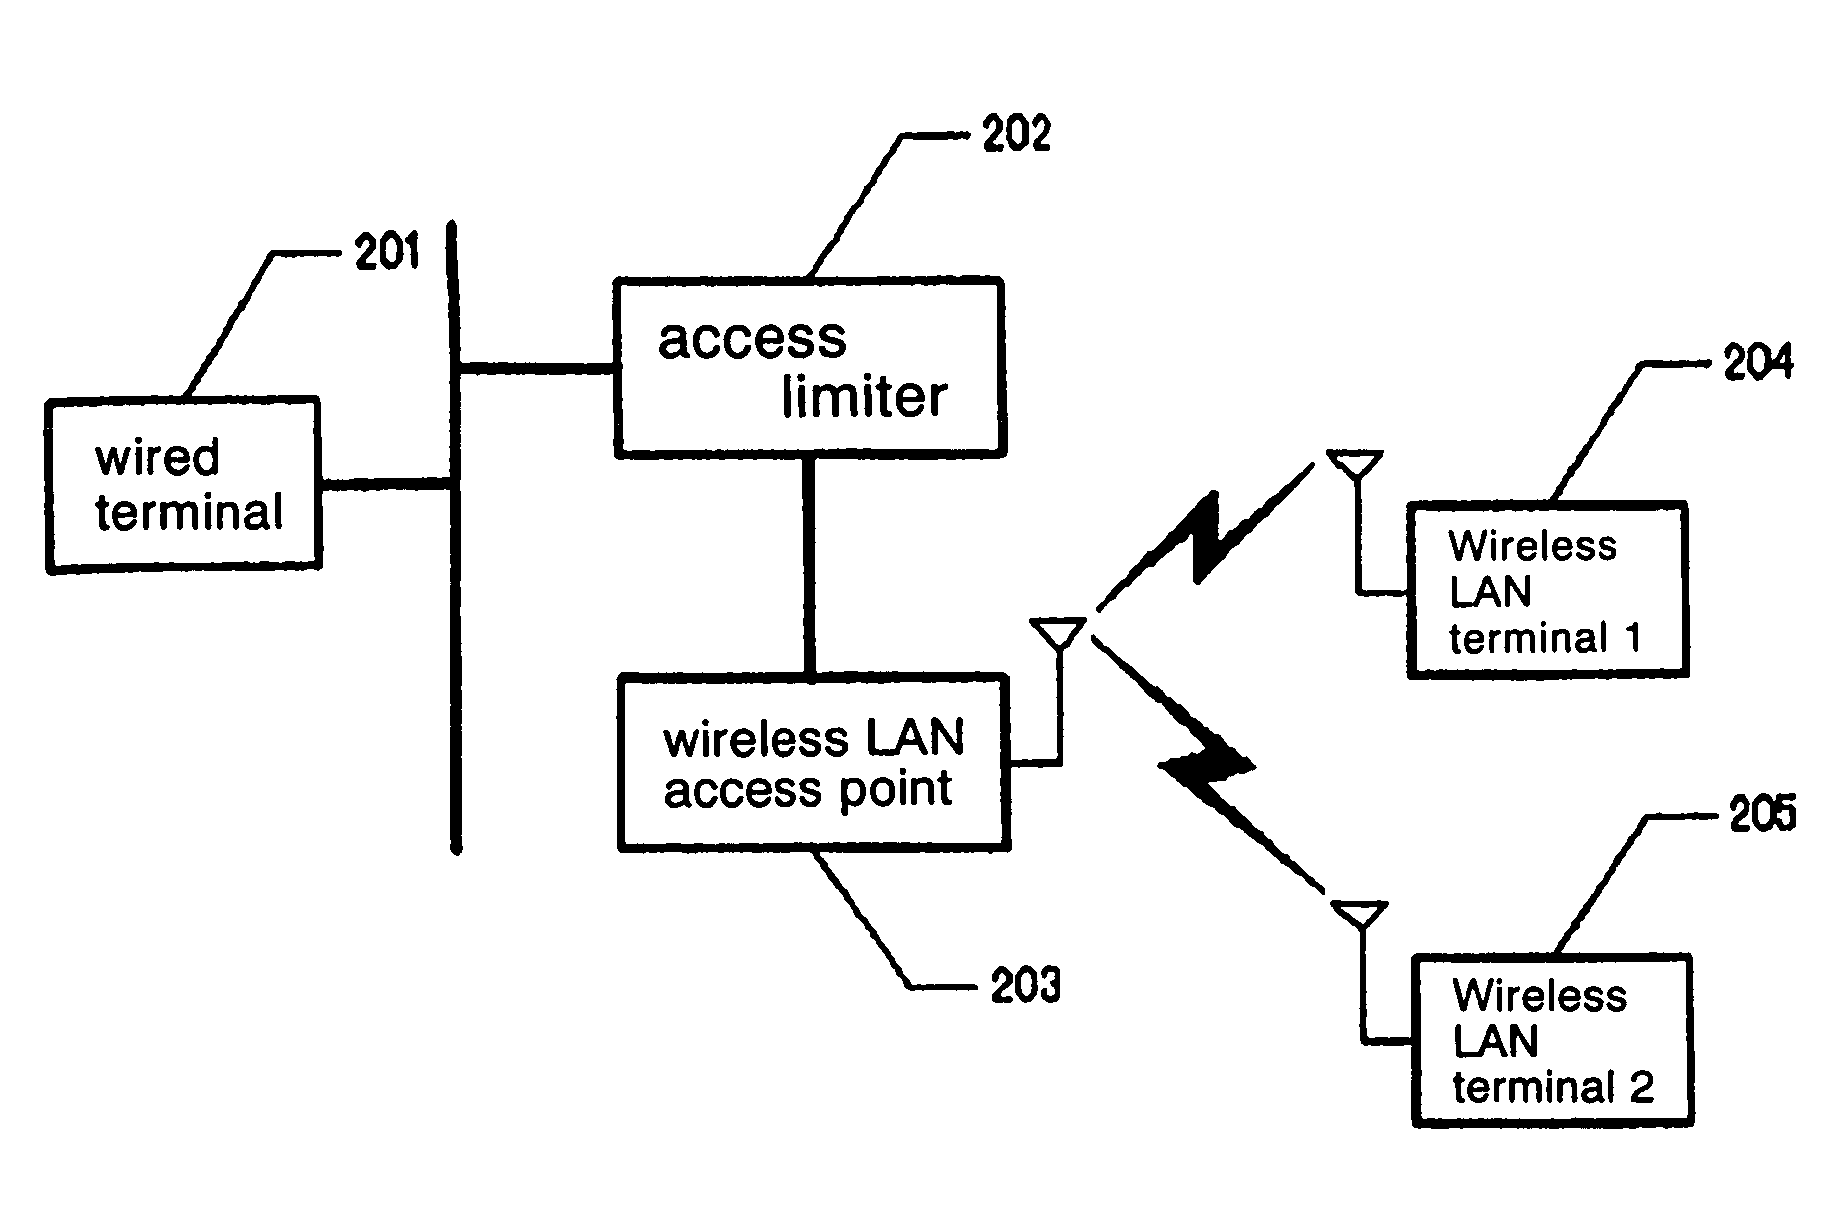 Method of limiting communication access between wireless LAN terminals